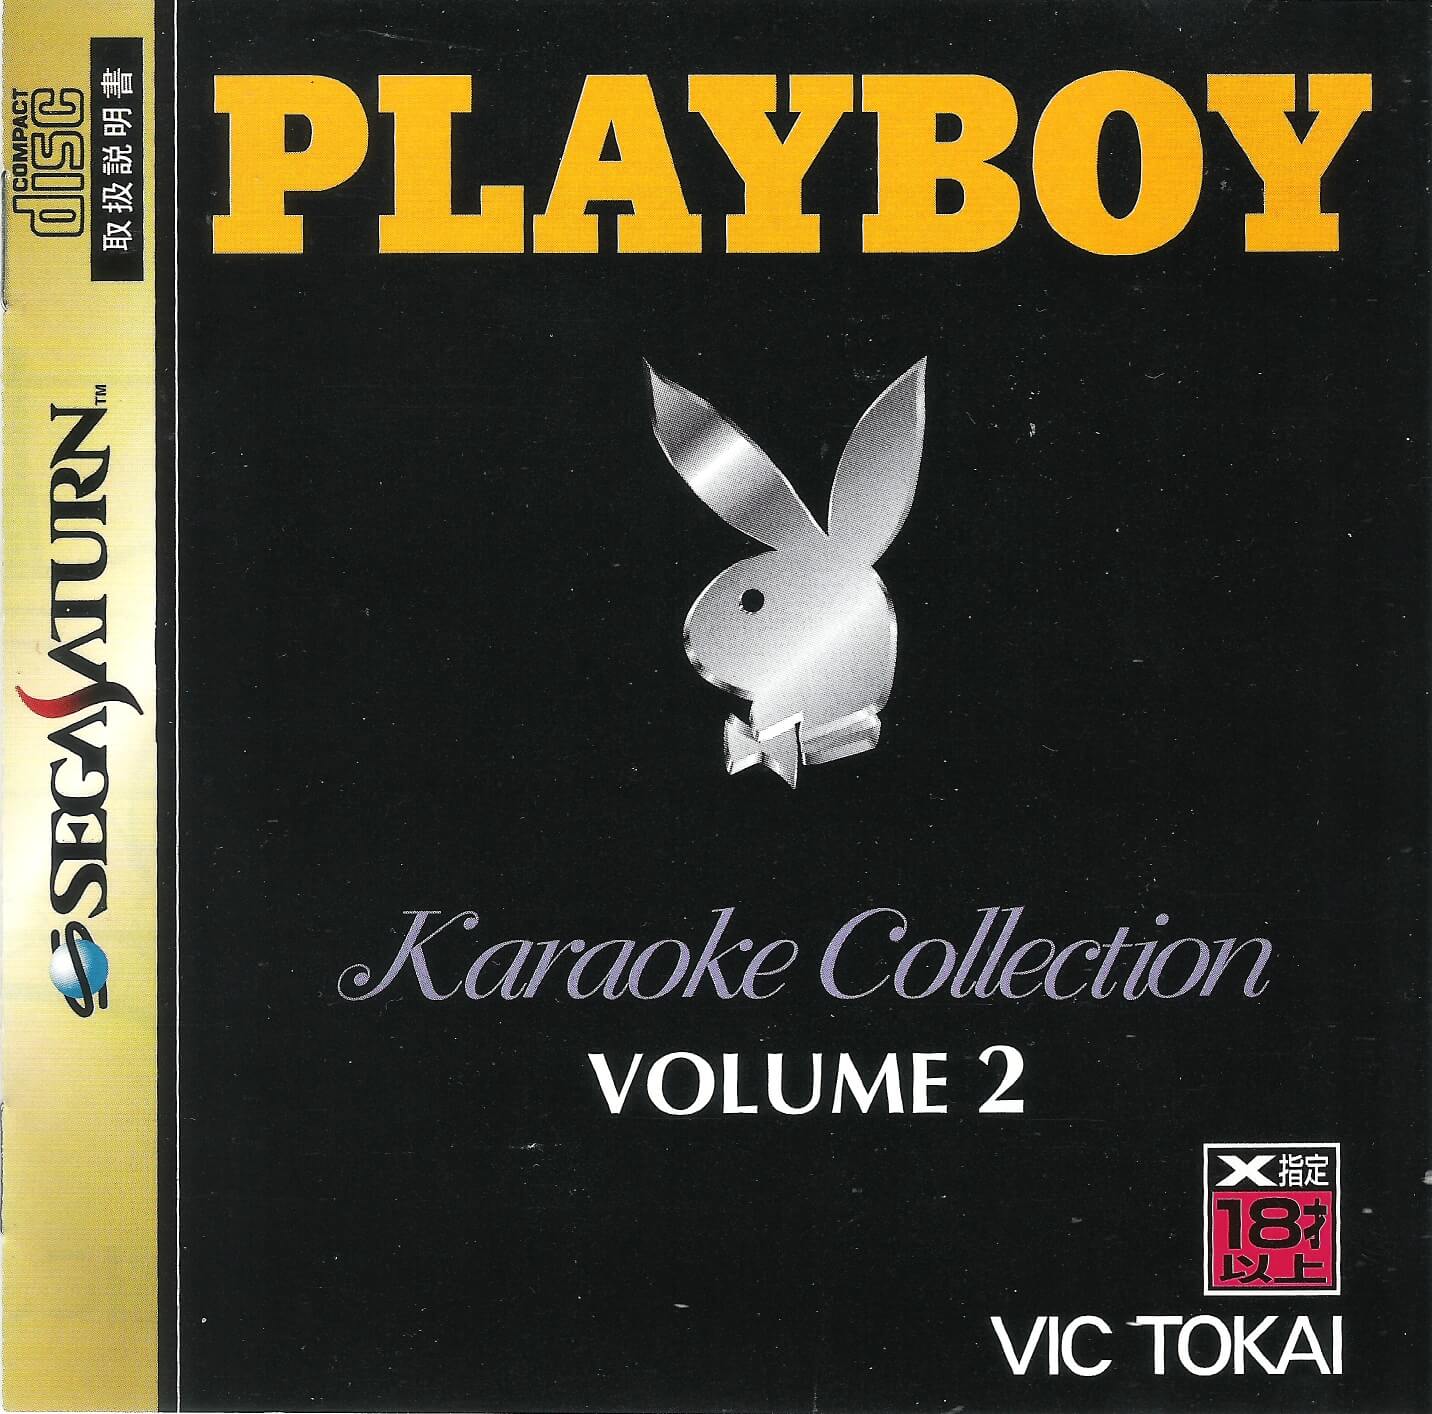 Playboy Karaoke Collection Volume 2